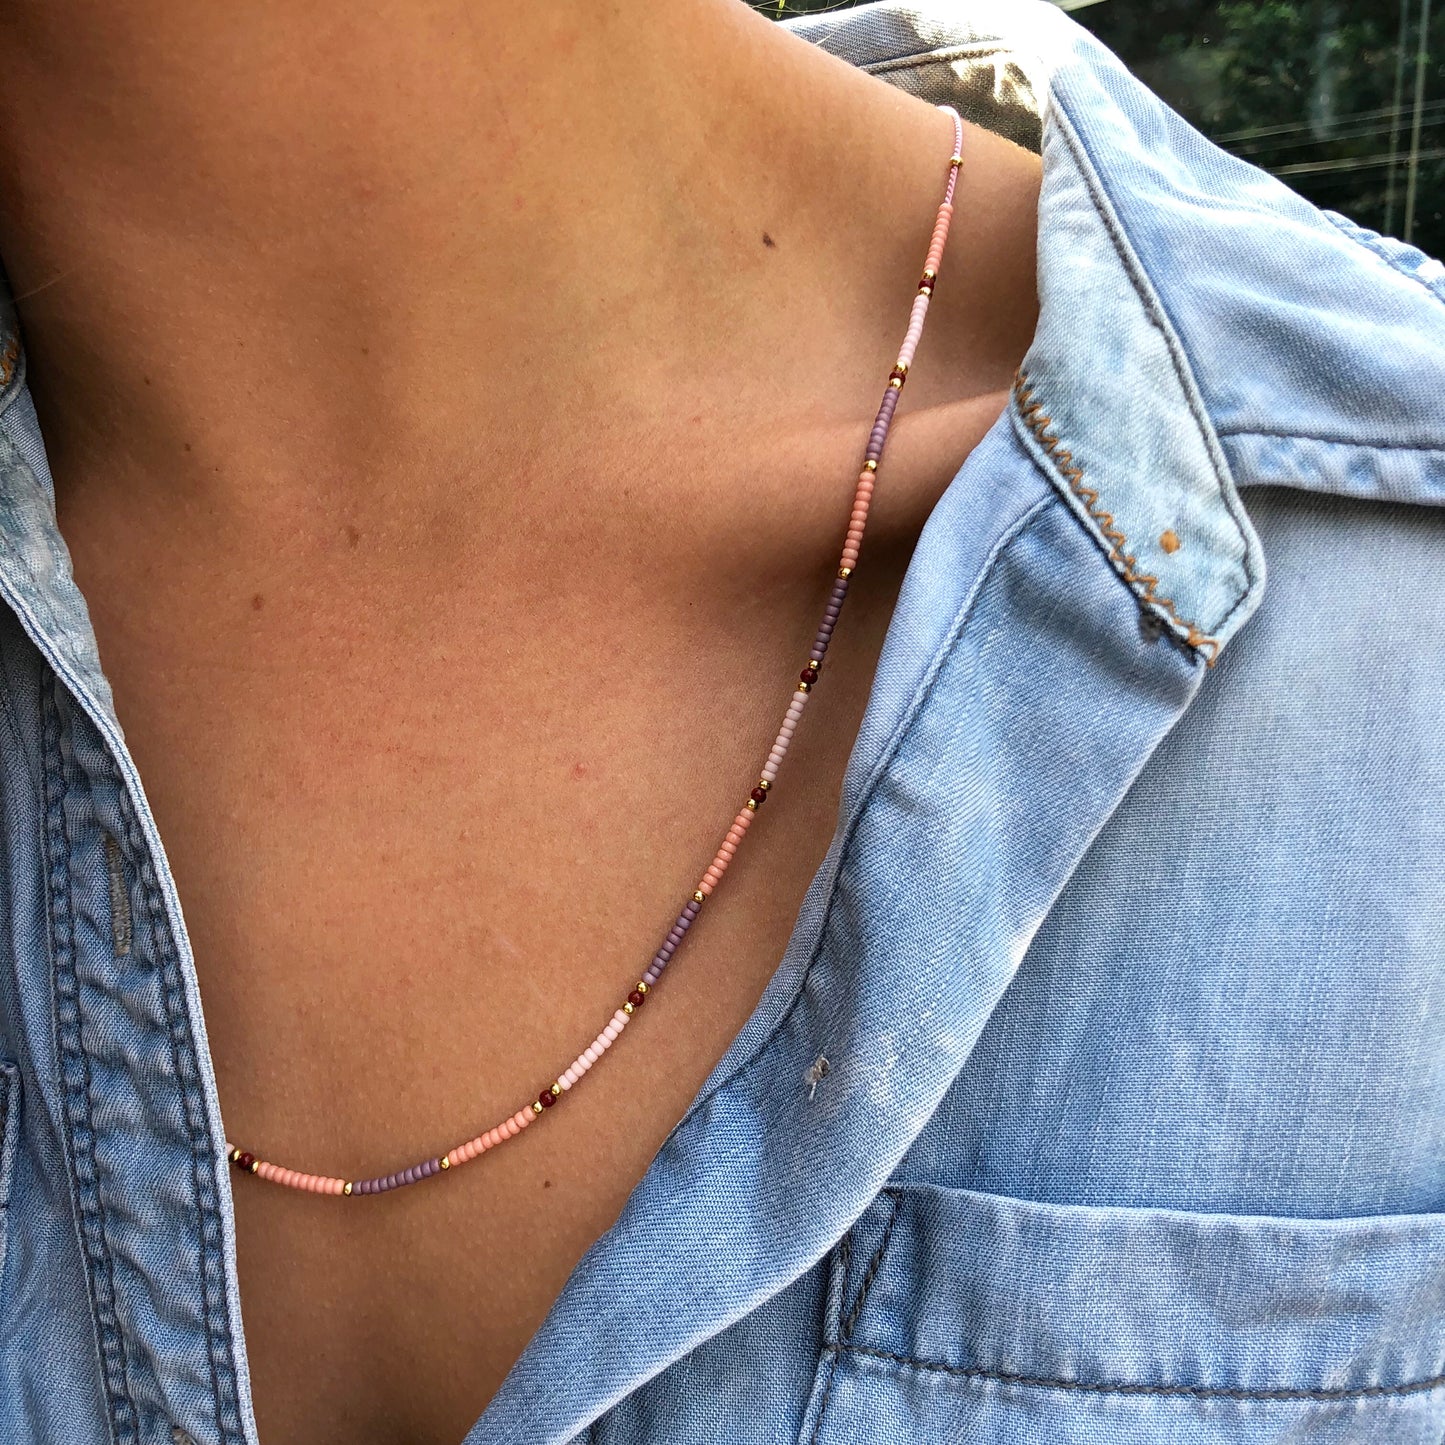 Dusty Pinks Necklace - Athena+Co - Jewellery - Jewelry - Beaded - Necklace - Bracelet - Fashion